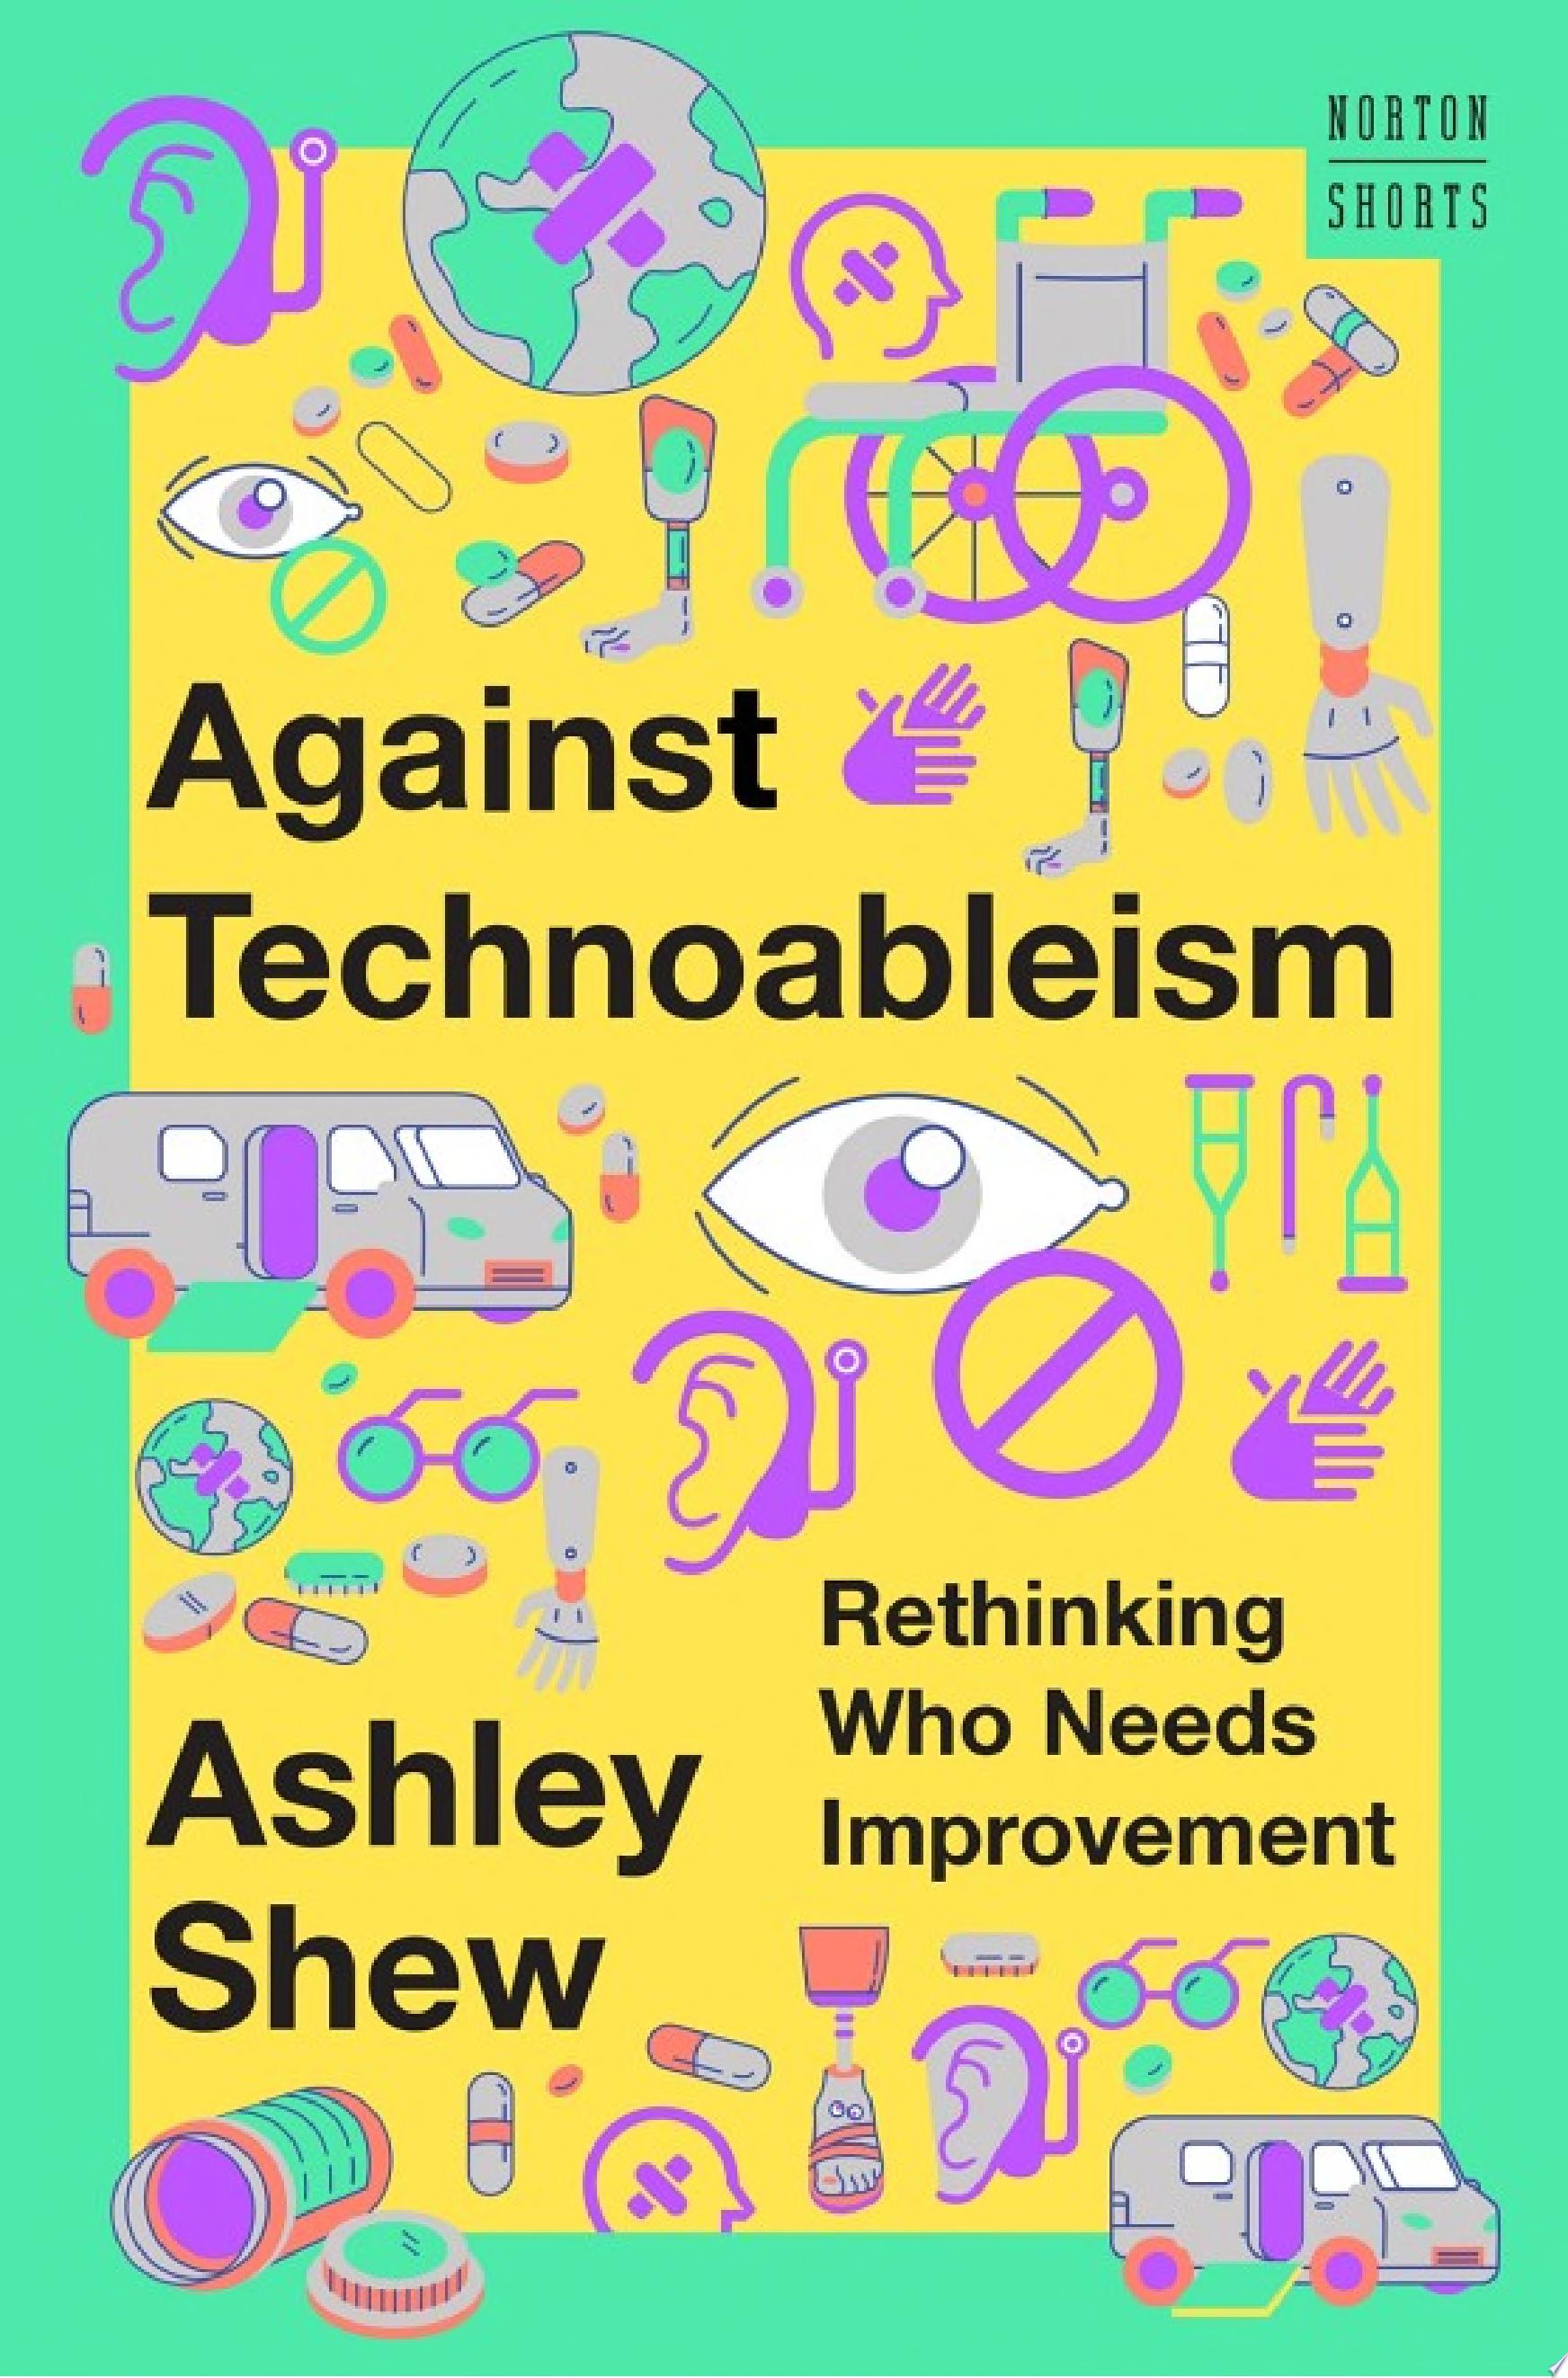 Image for "Against Technoableism: Rethinking Who Needs Improvement"